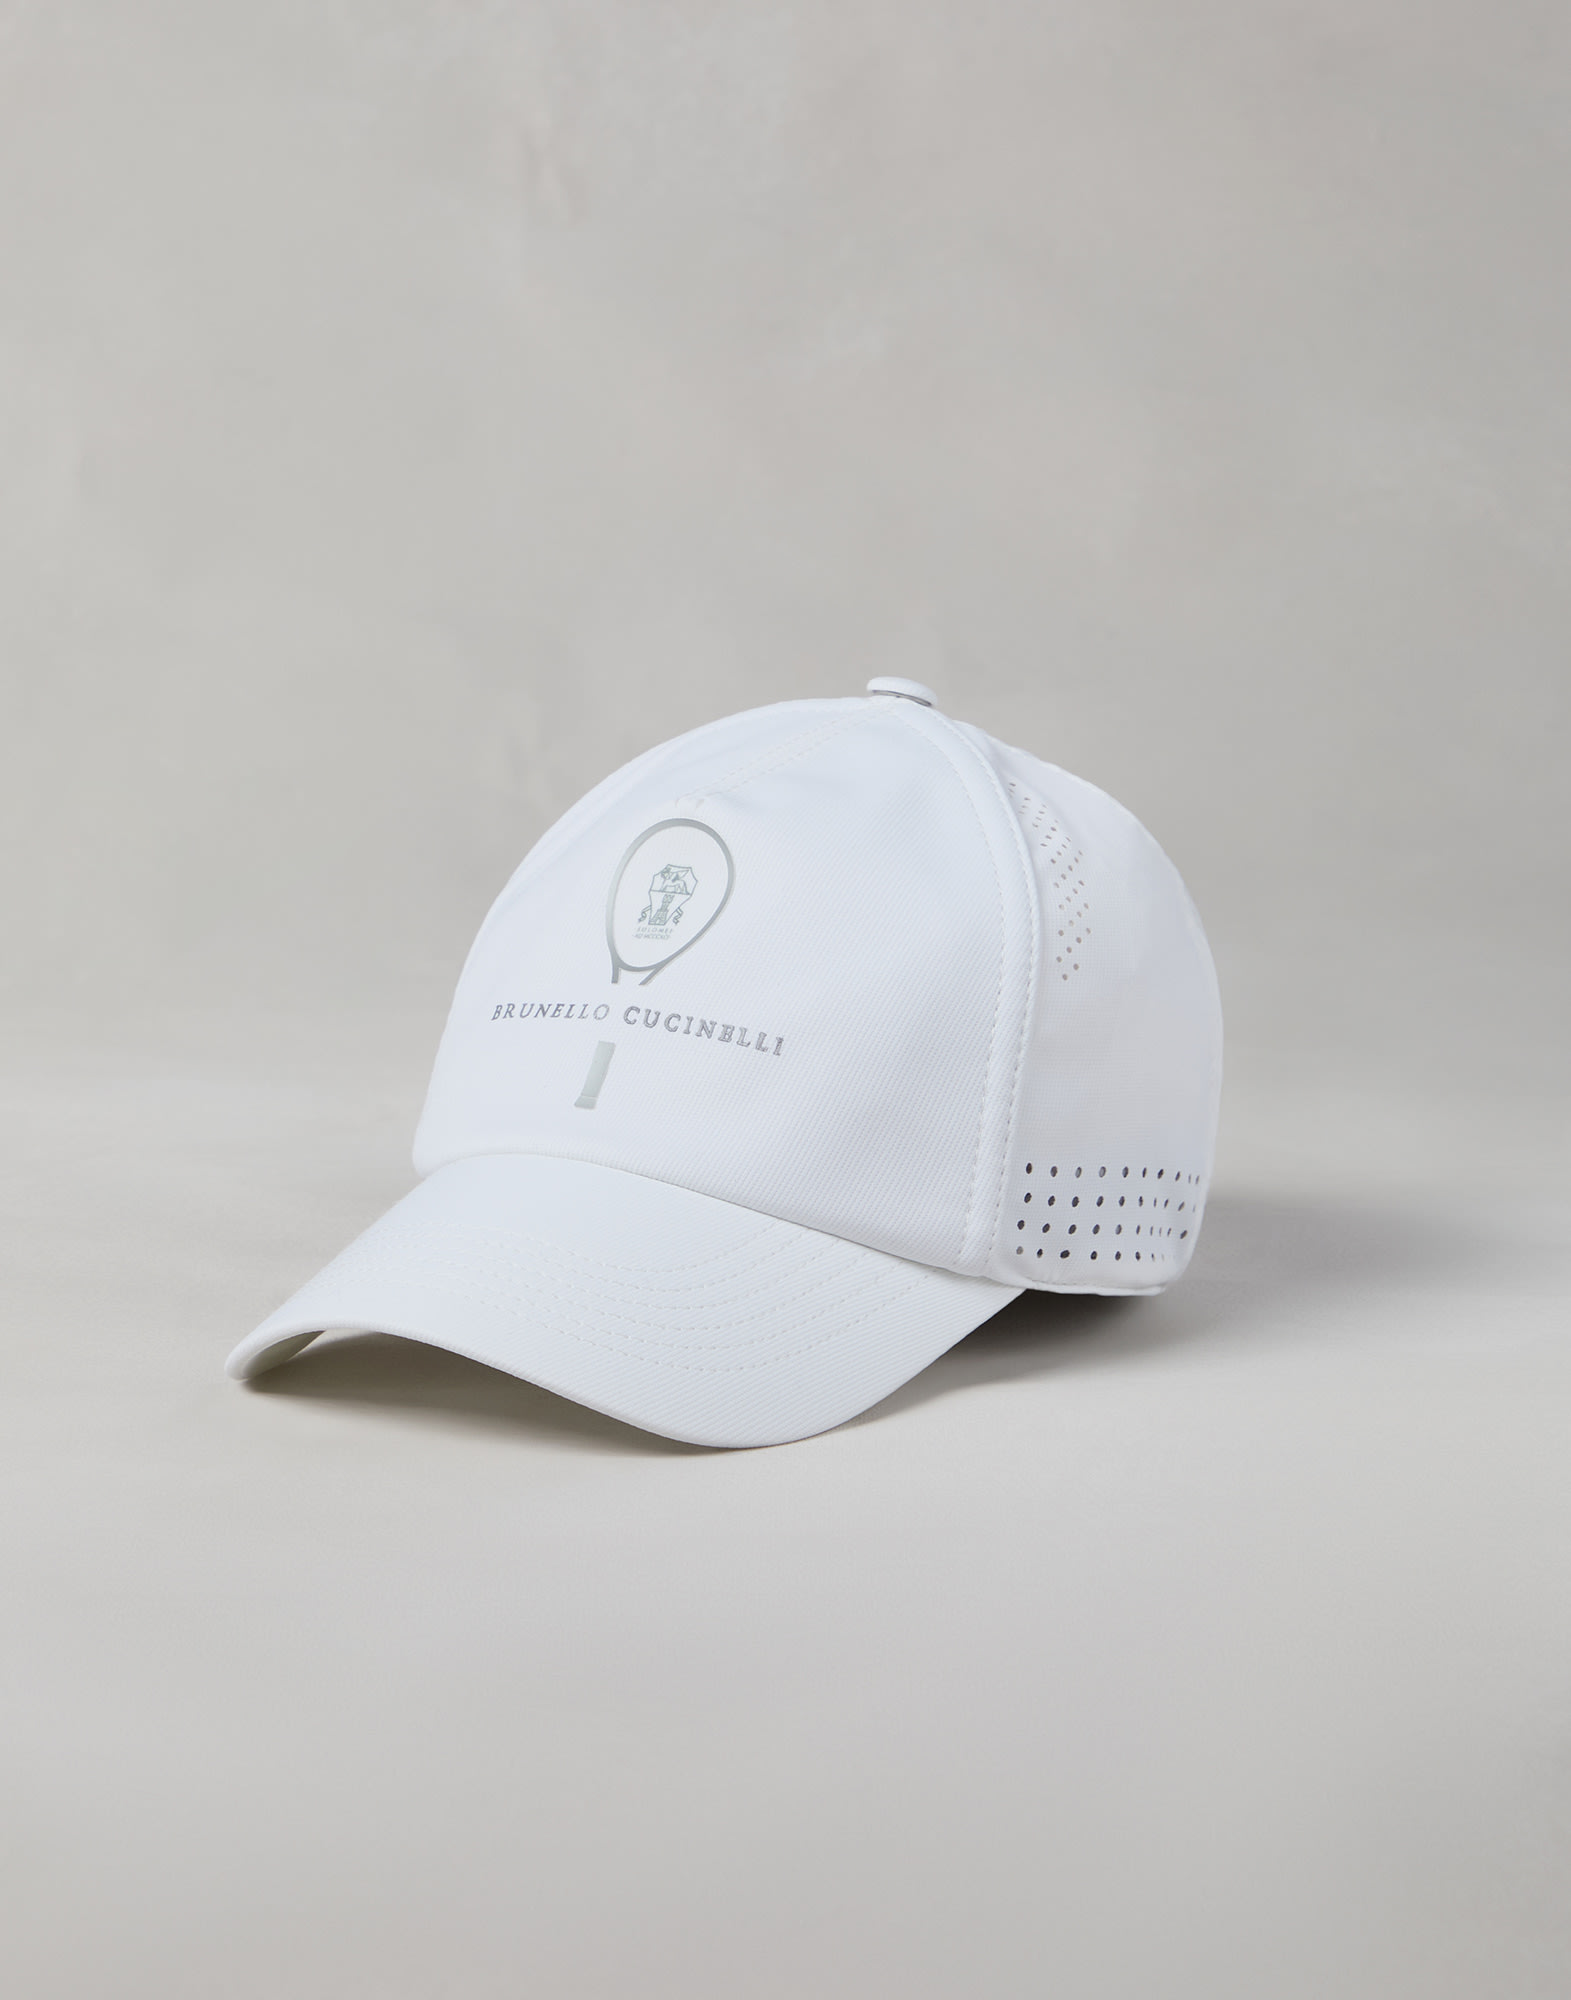 Cap with Tennis print